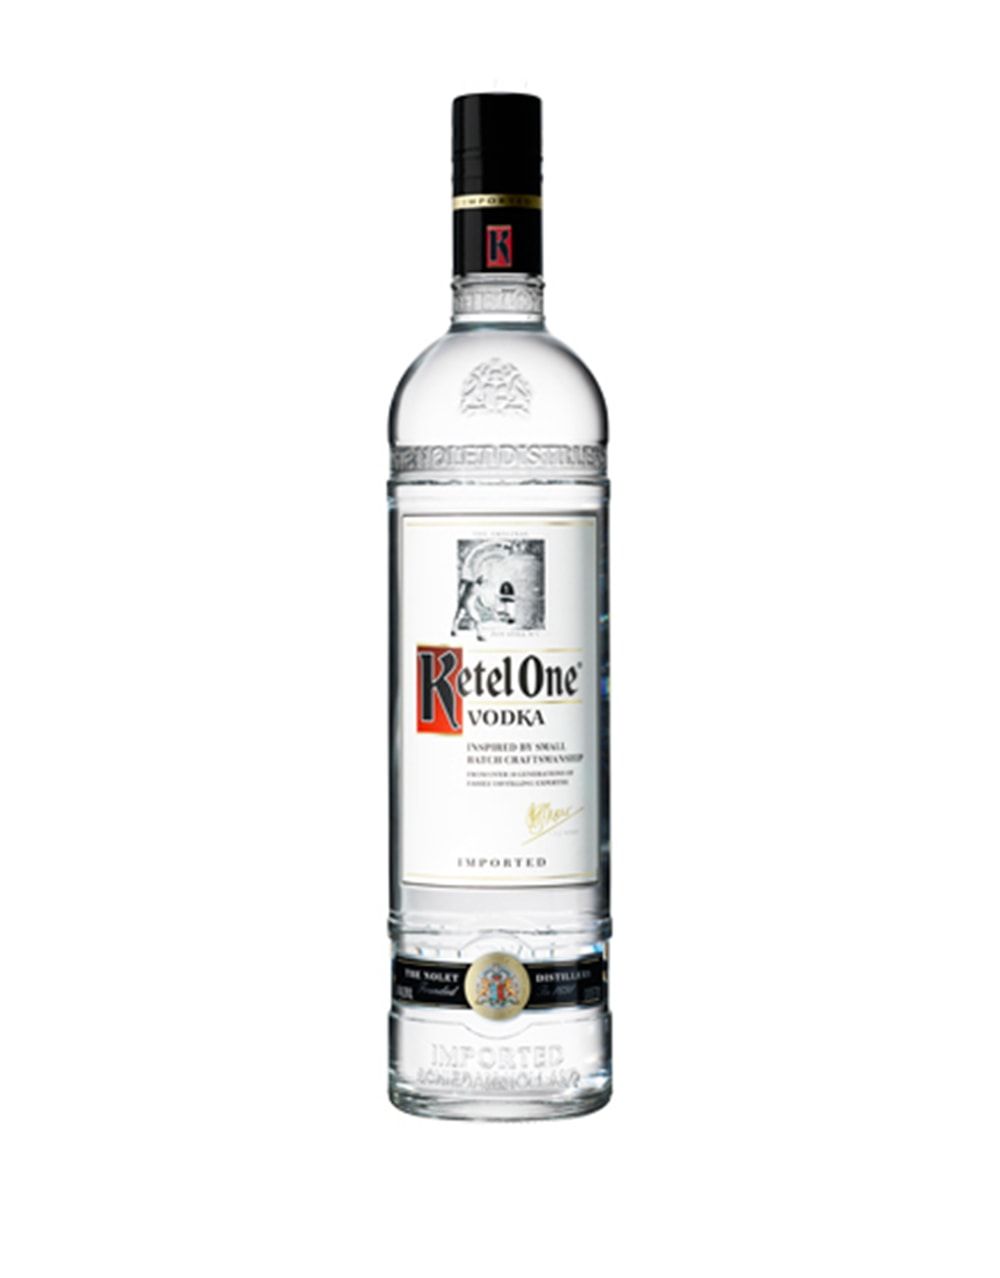 2) Ketel One Vodka (The Netherlands)